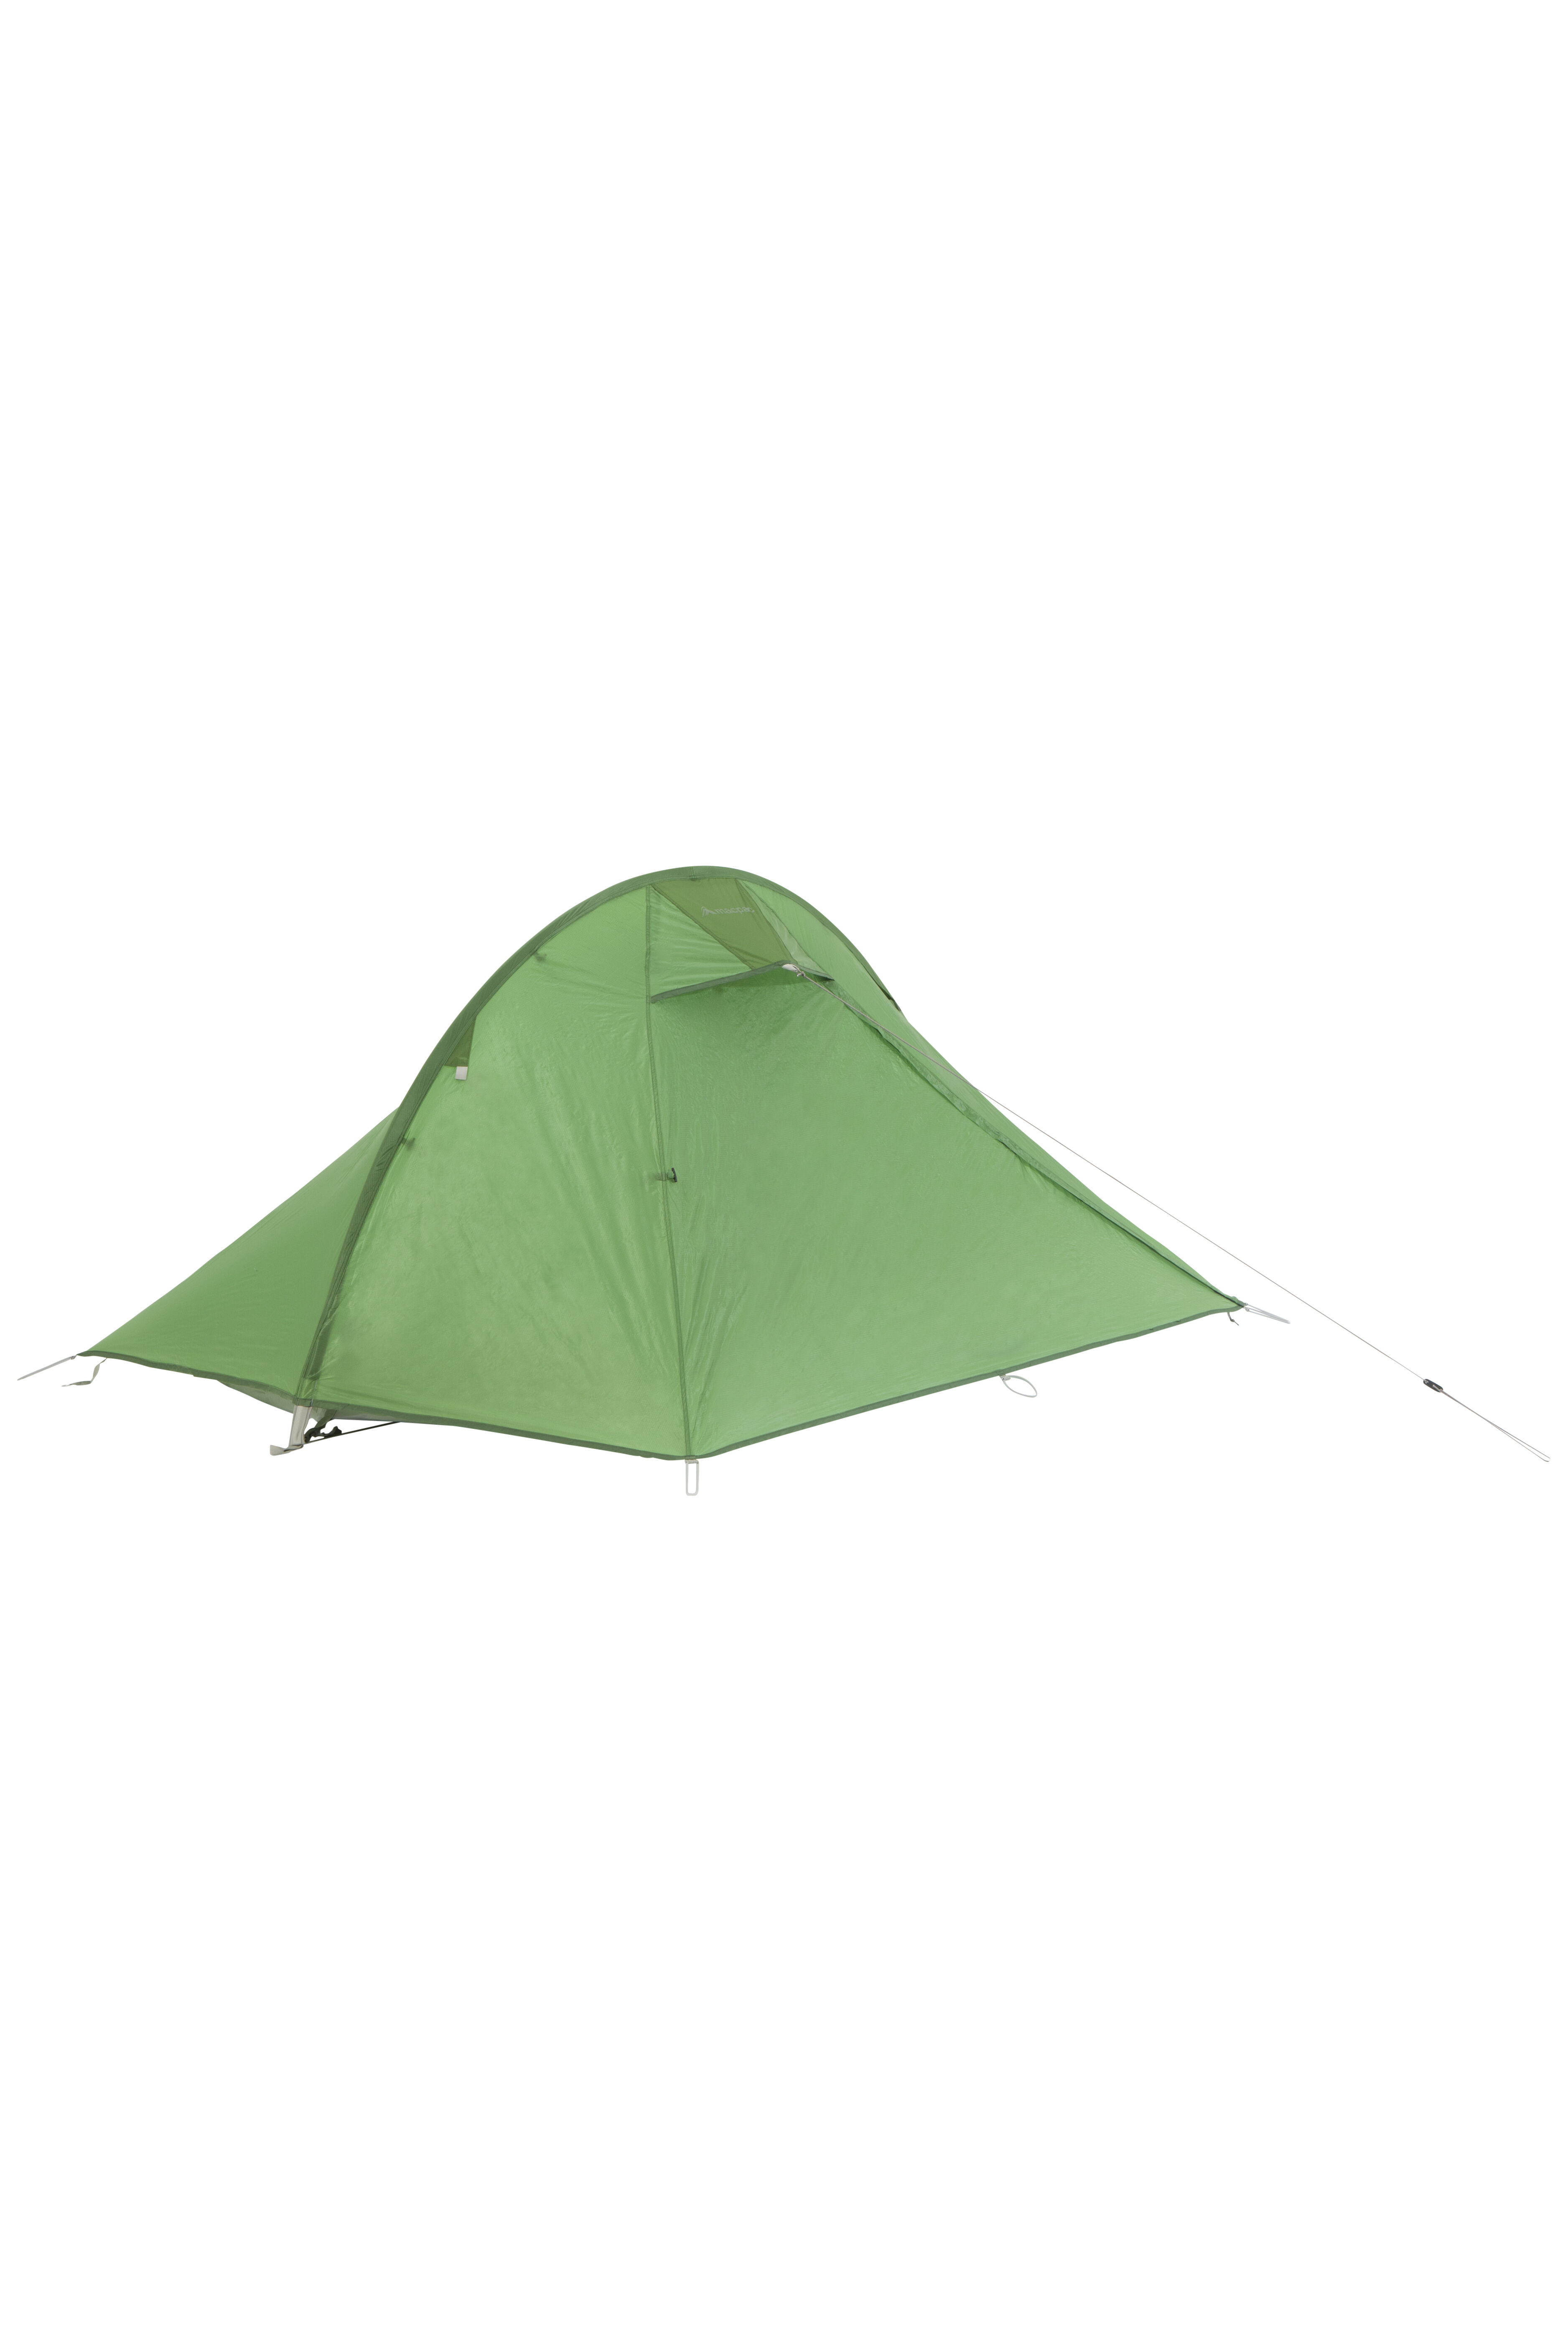 Macpac Microlight Hiking Tent — One Person | Macpac